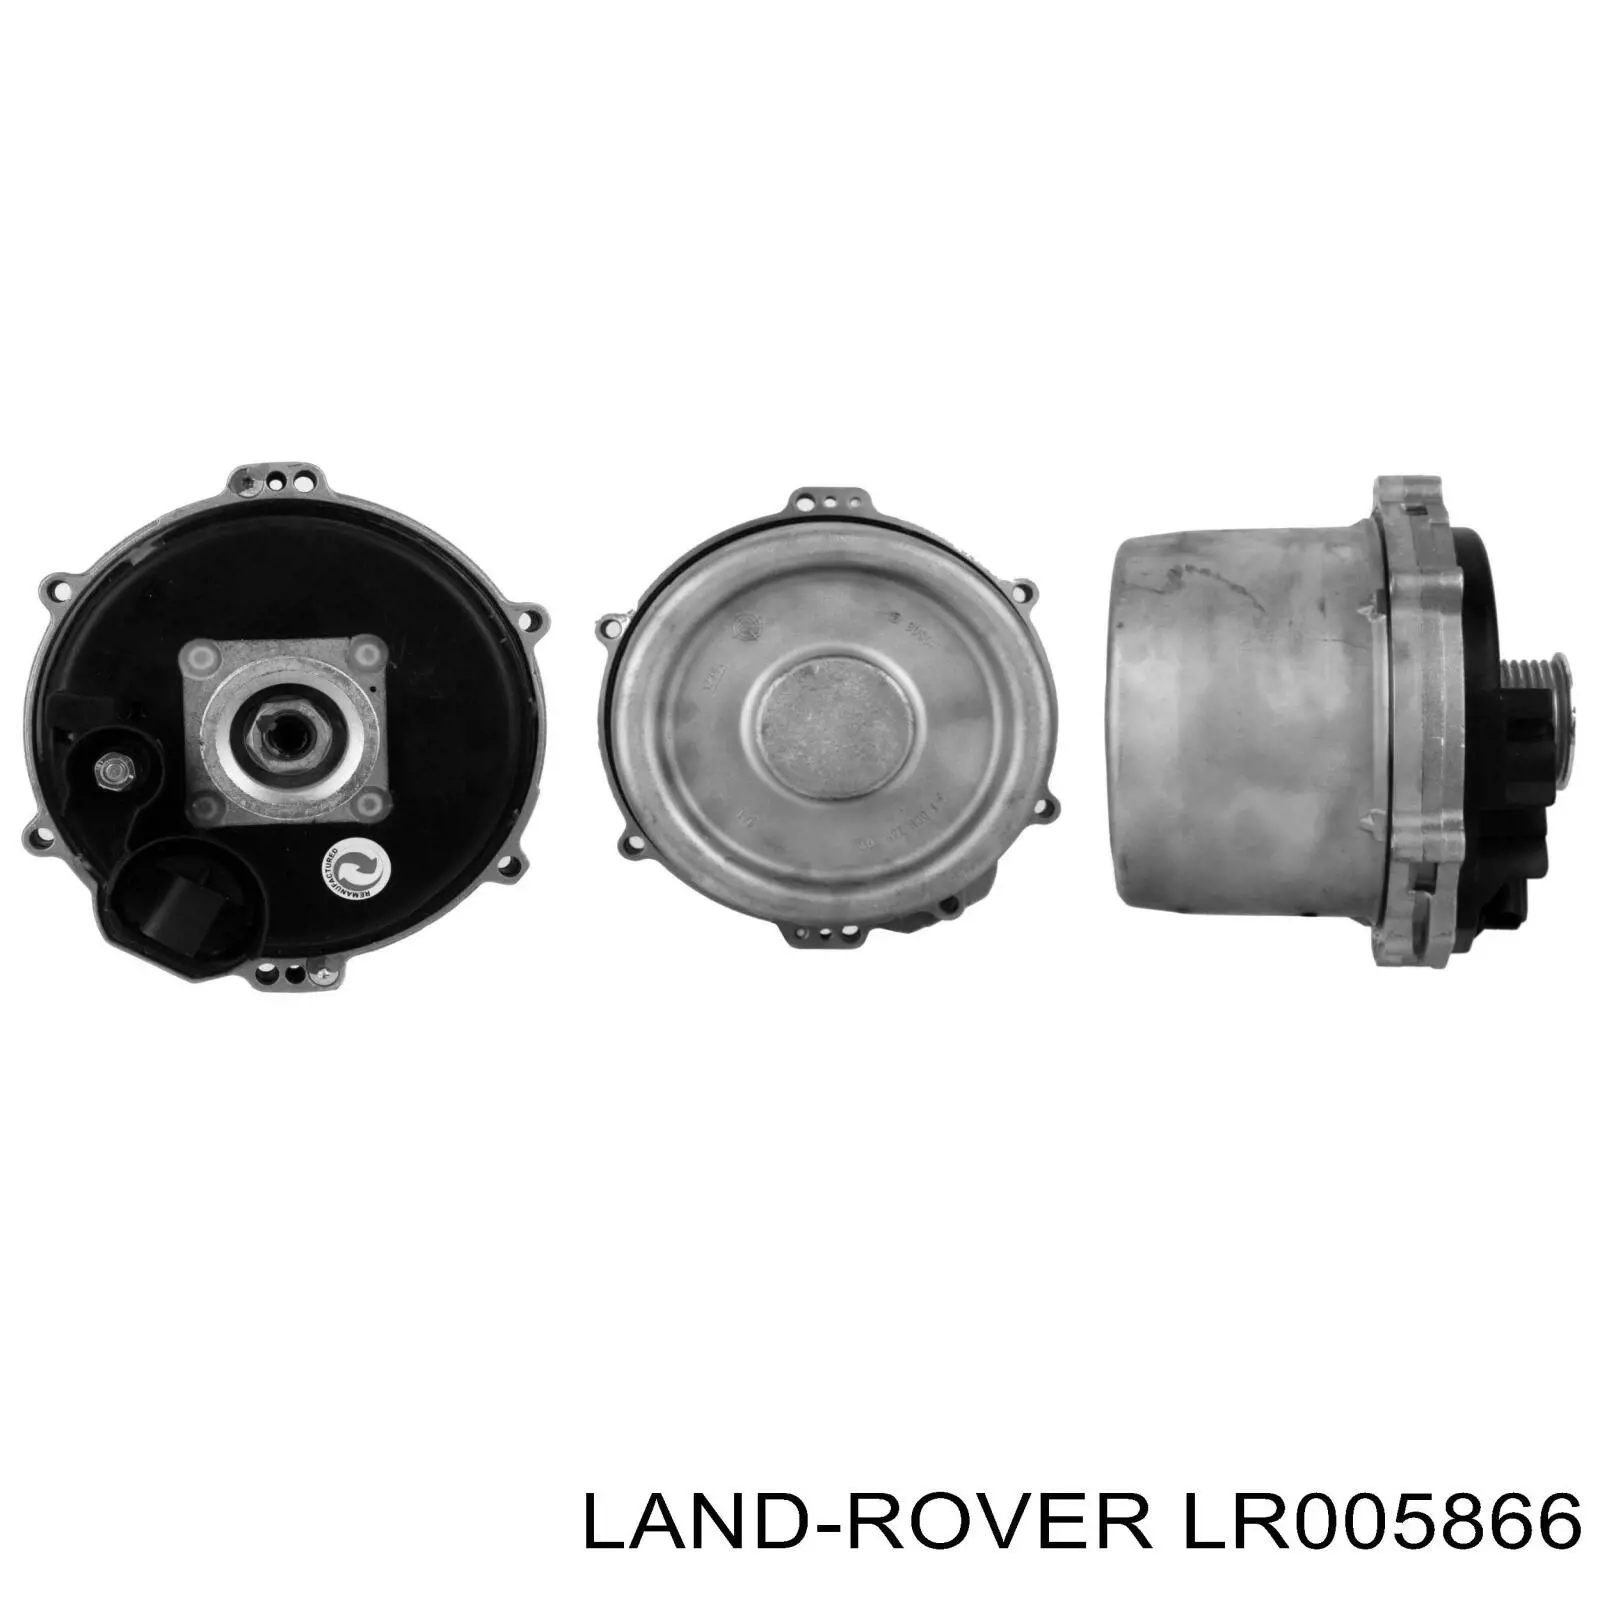 LR005866 Land Rover alternador